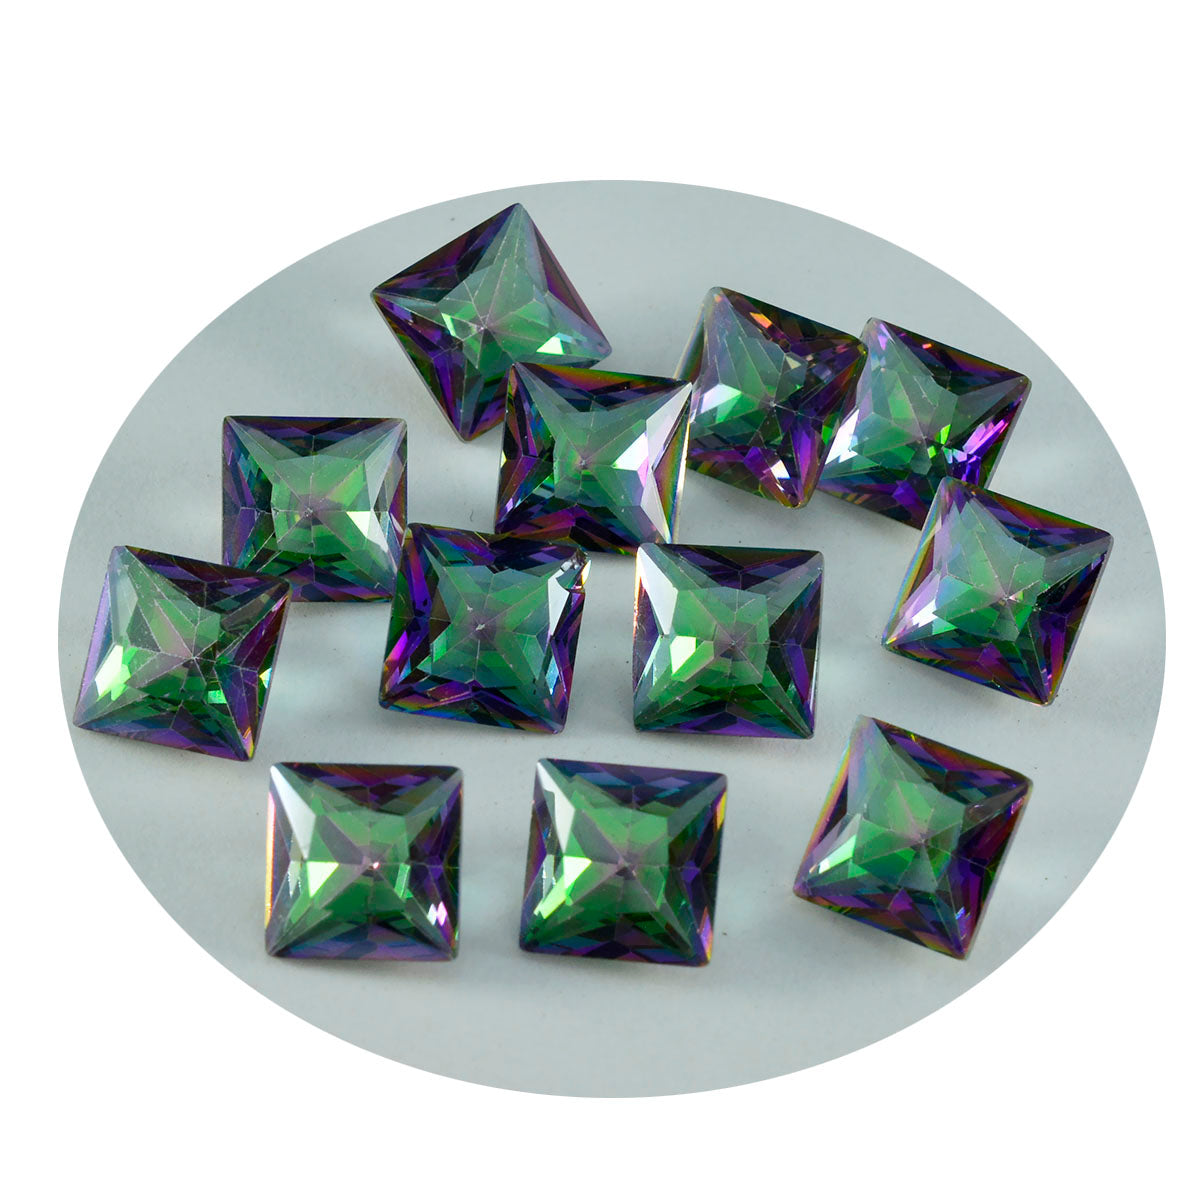 Riyogems 1PC Multi Color Mystic Quartz Faceted 10x10 mm Square Shape good-looking Quality Gems